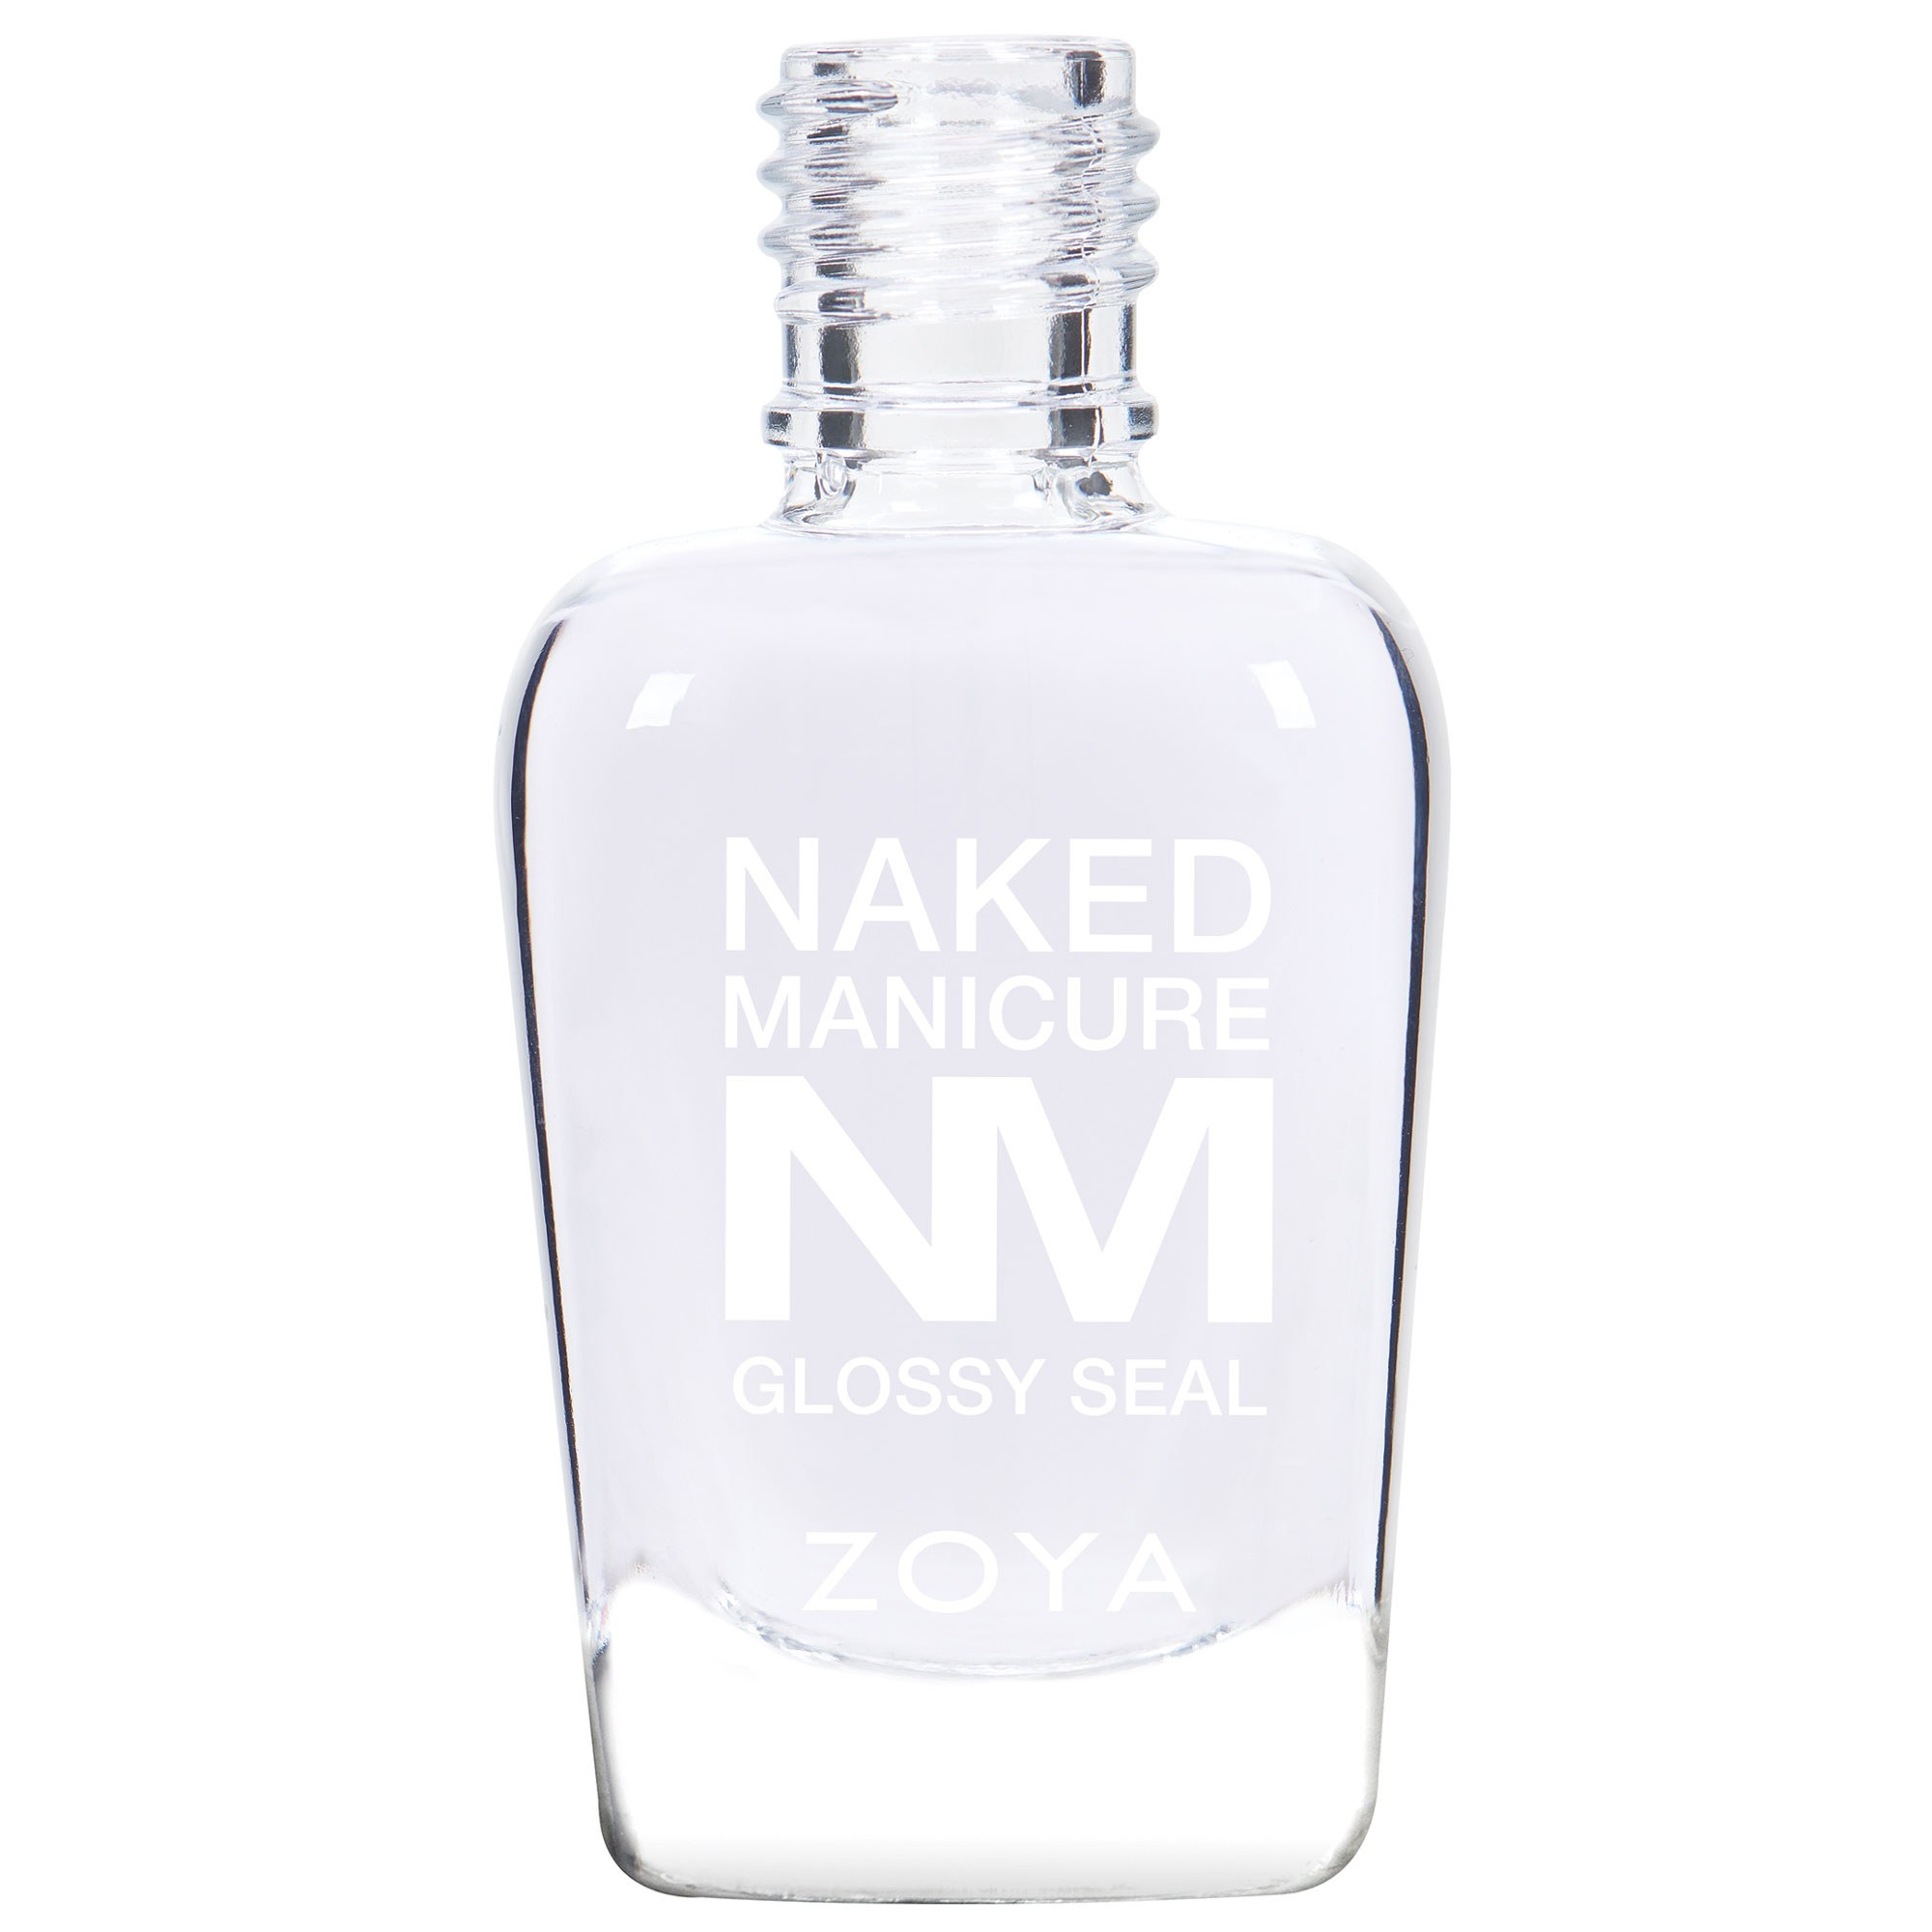 Zoya Naked Manicure Seal - Glossy